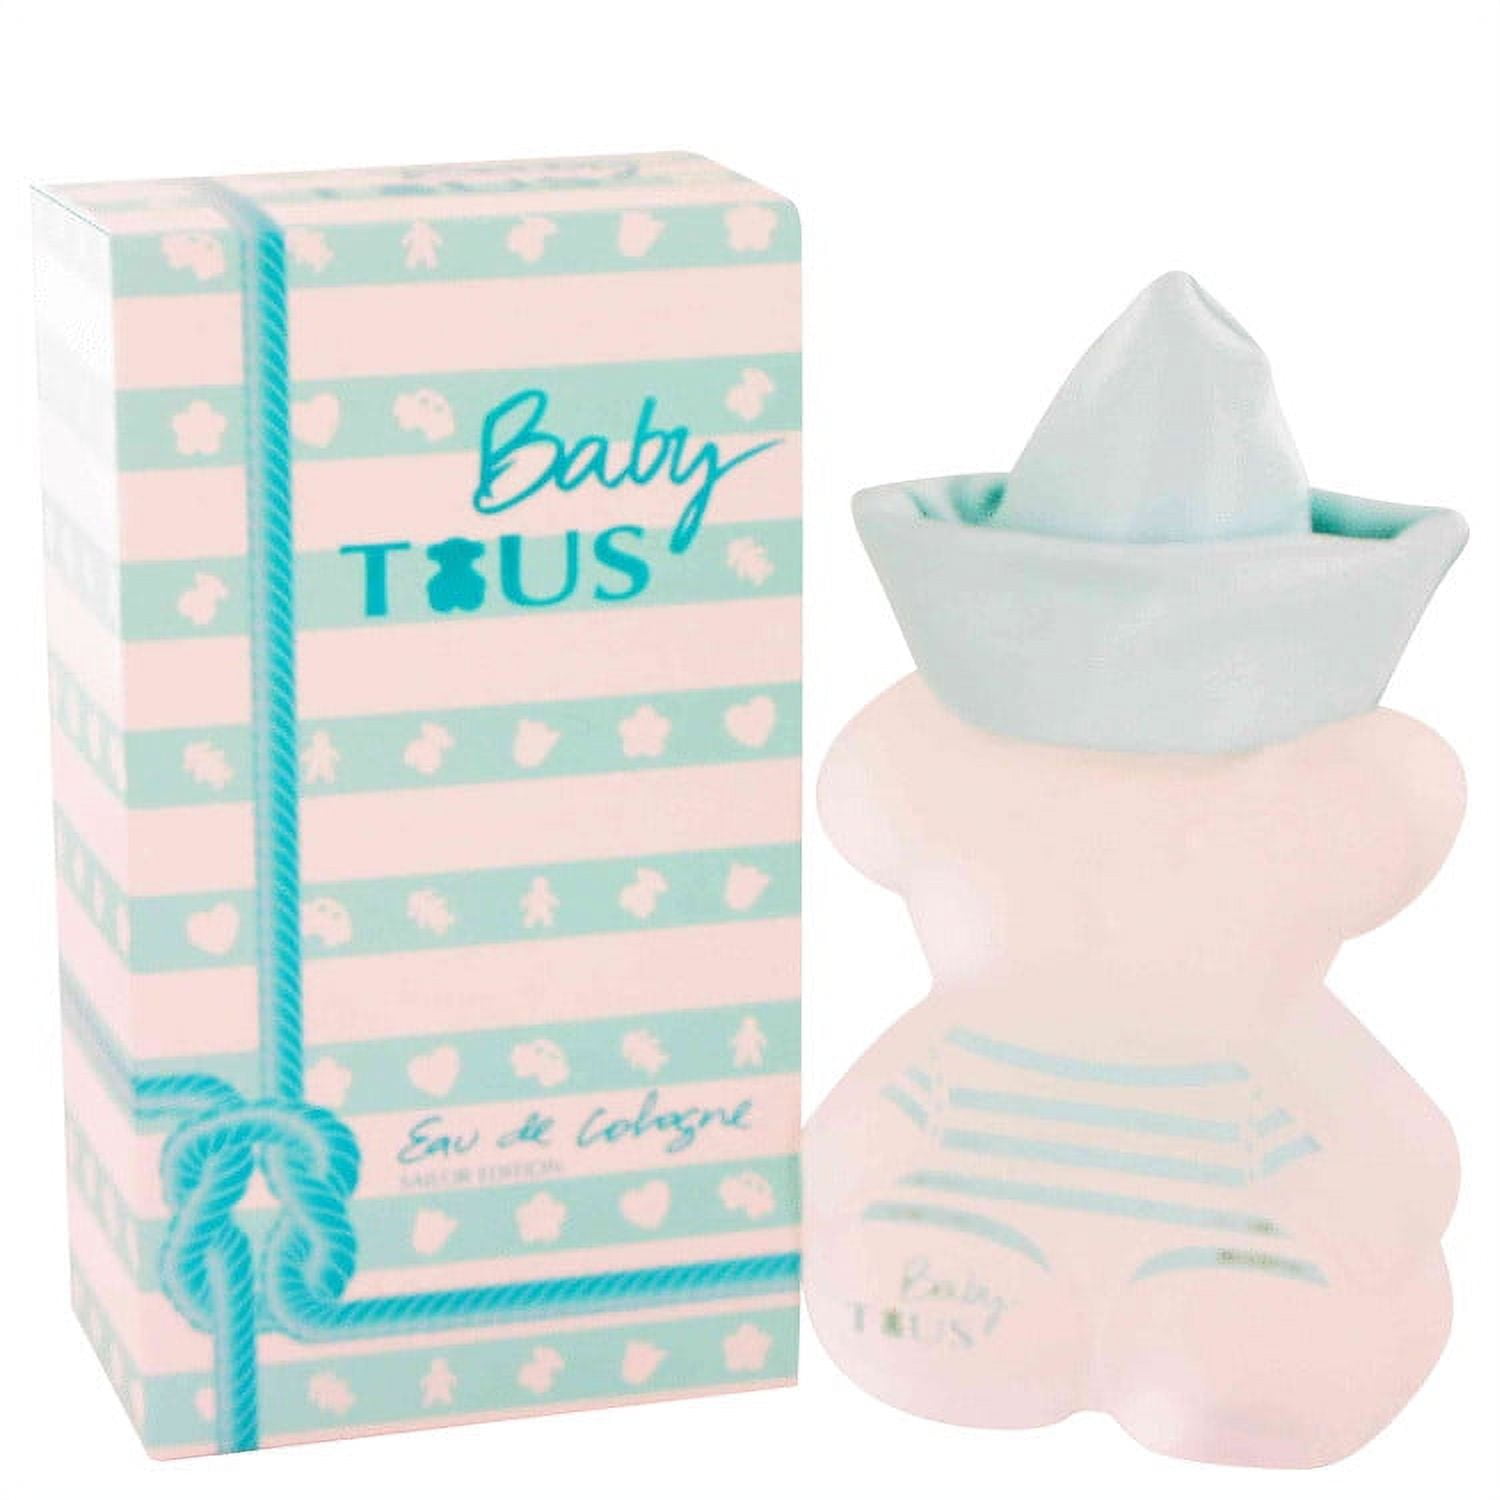 Baby By Tous 100ml Eea De Colongne Spray, 3.4-Ounce : Eau De Toilettes :  Beauty & Personal Care 